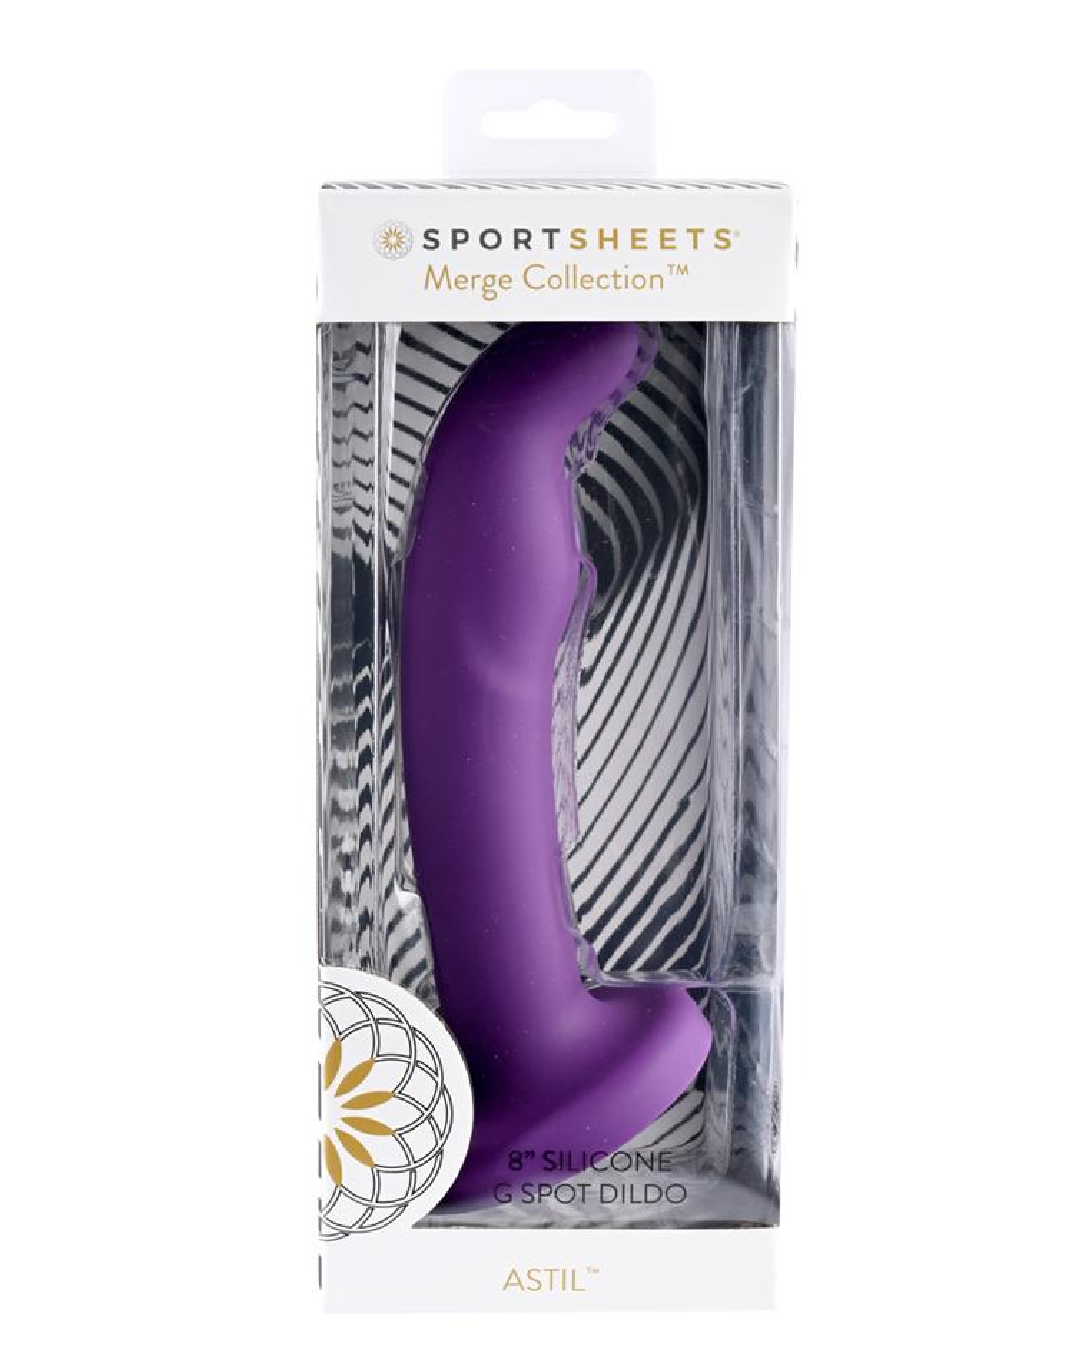 Sportsheets Astil 8" Silicone G-Spot & Prostate Dildo - Purple in the box